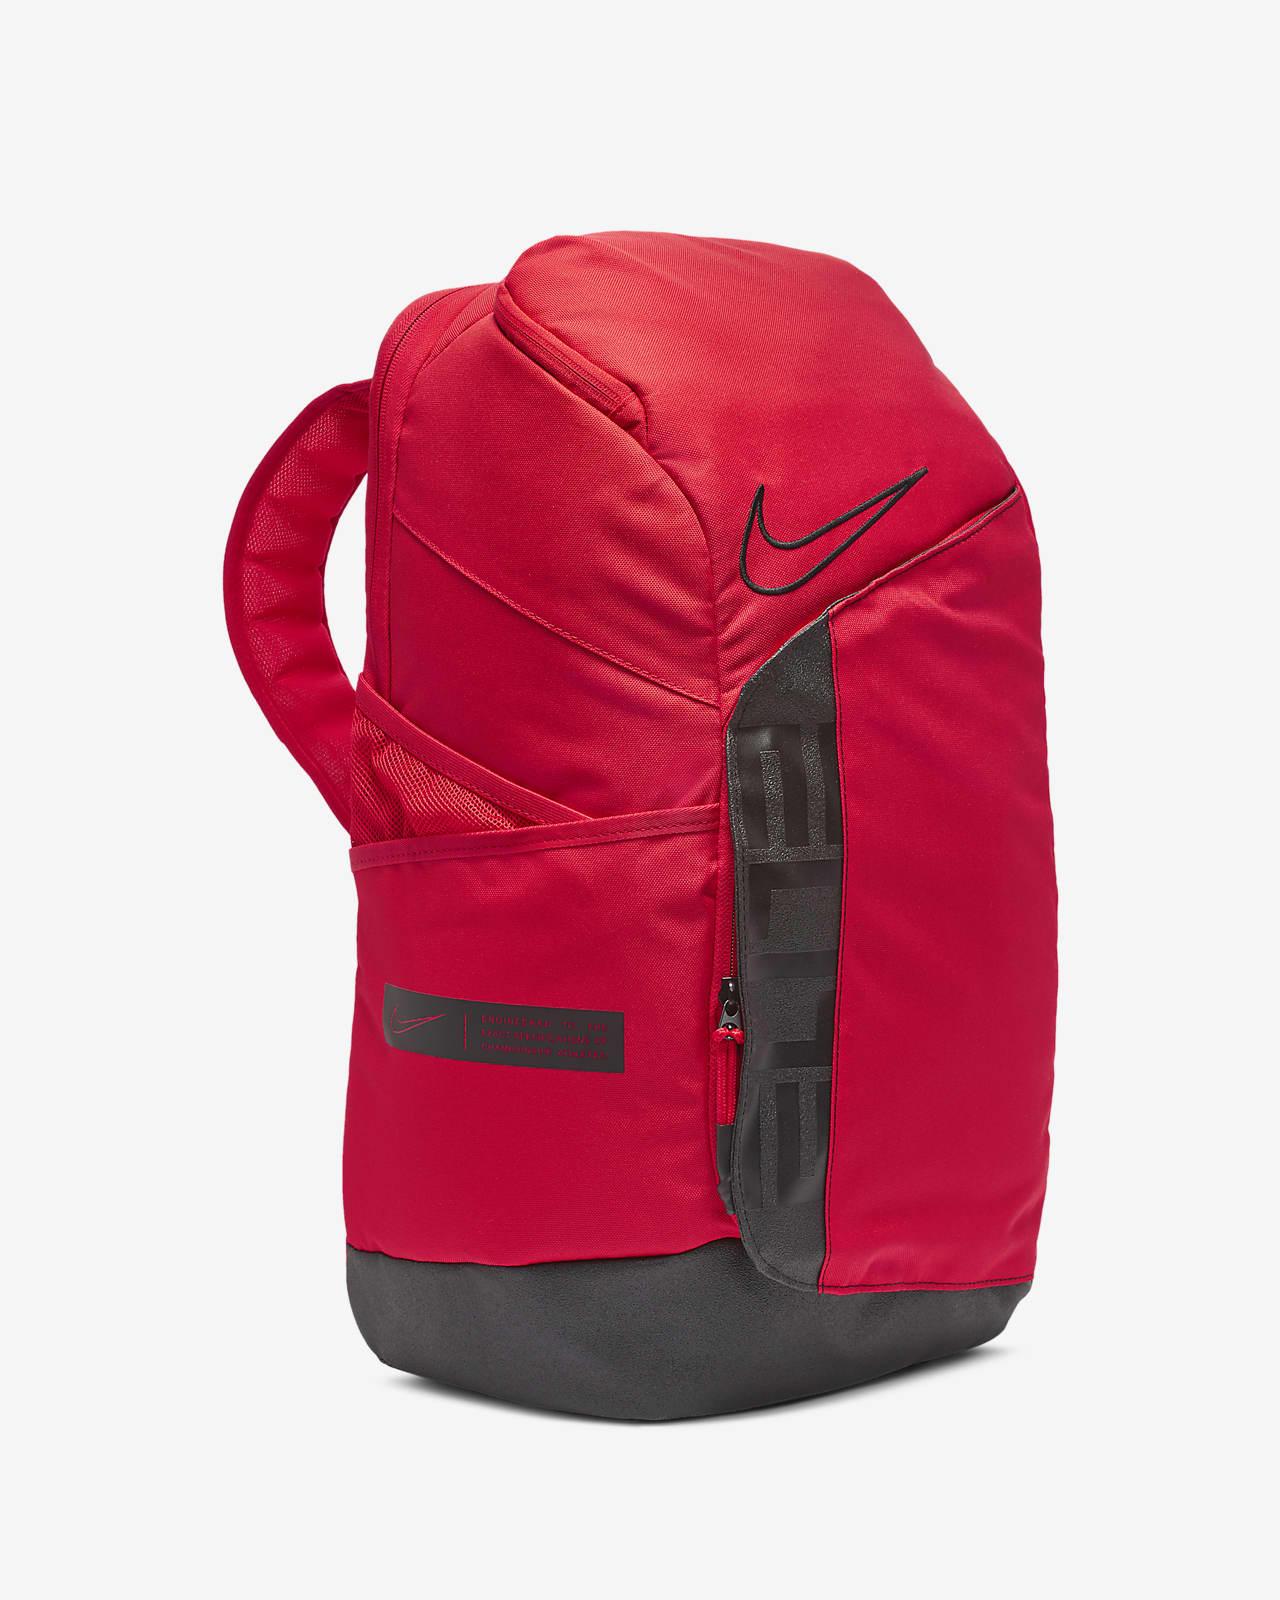 nike elite backpack dimensions